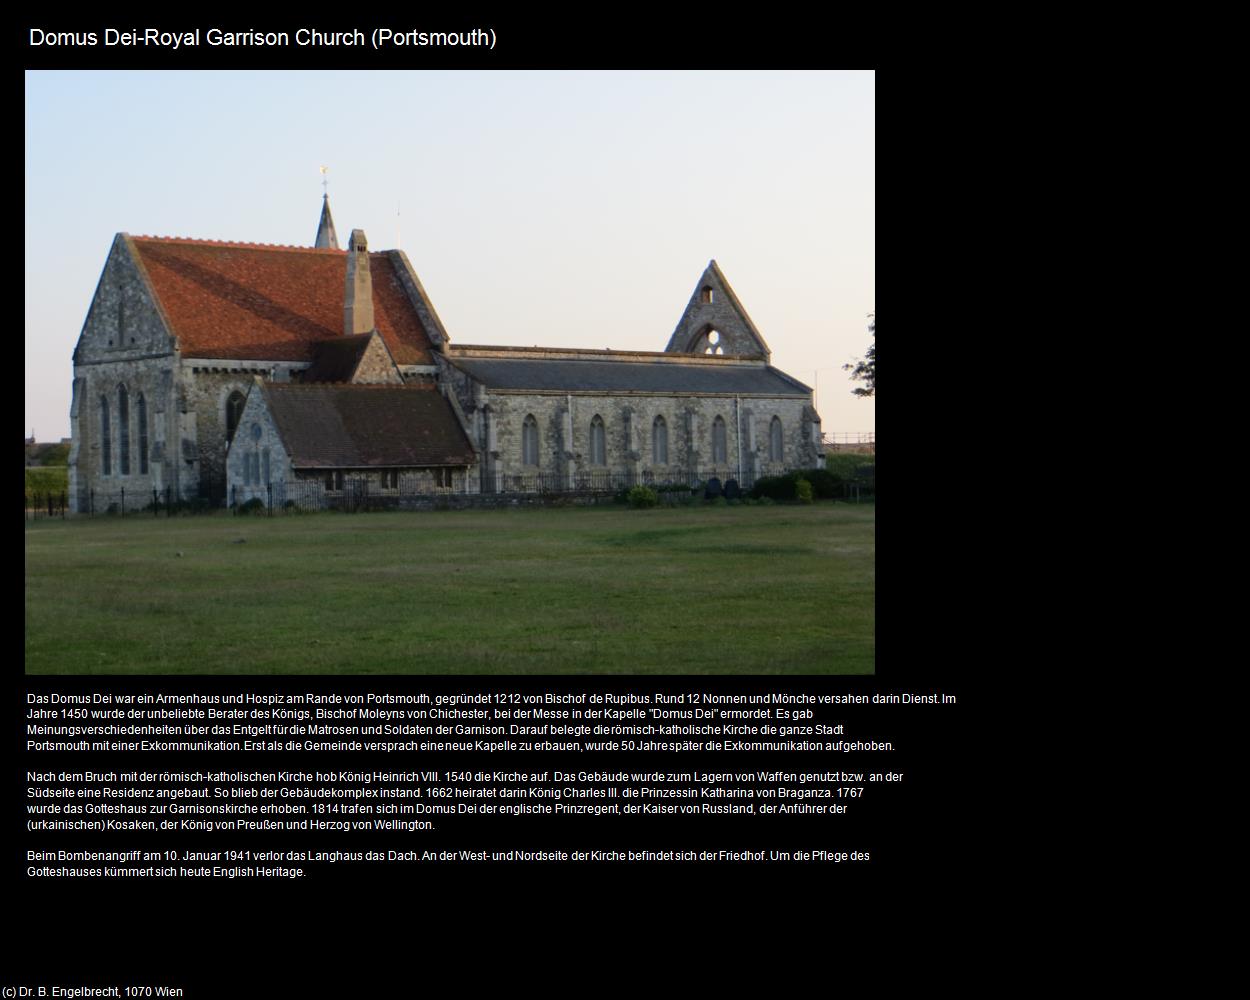 Domus Dei-Royal Garrison Church  (Portsmouth, England) in Kulturatlas-ENGLAND und WALES